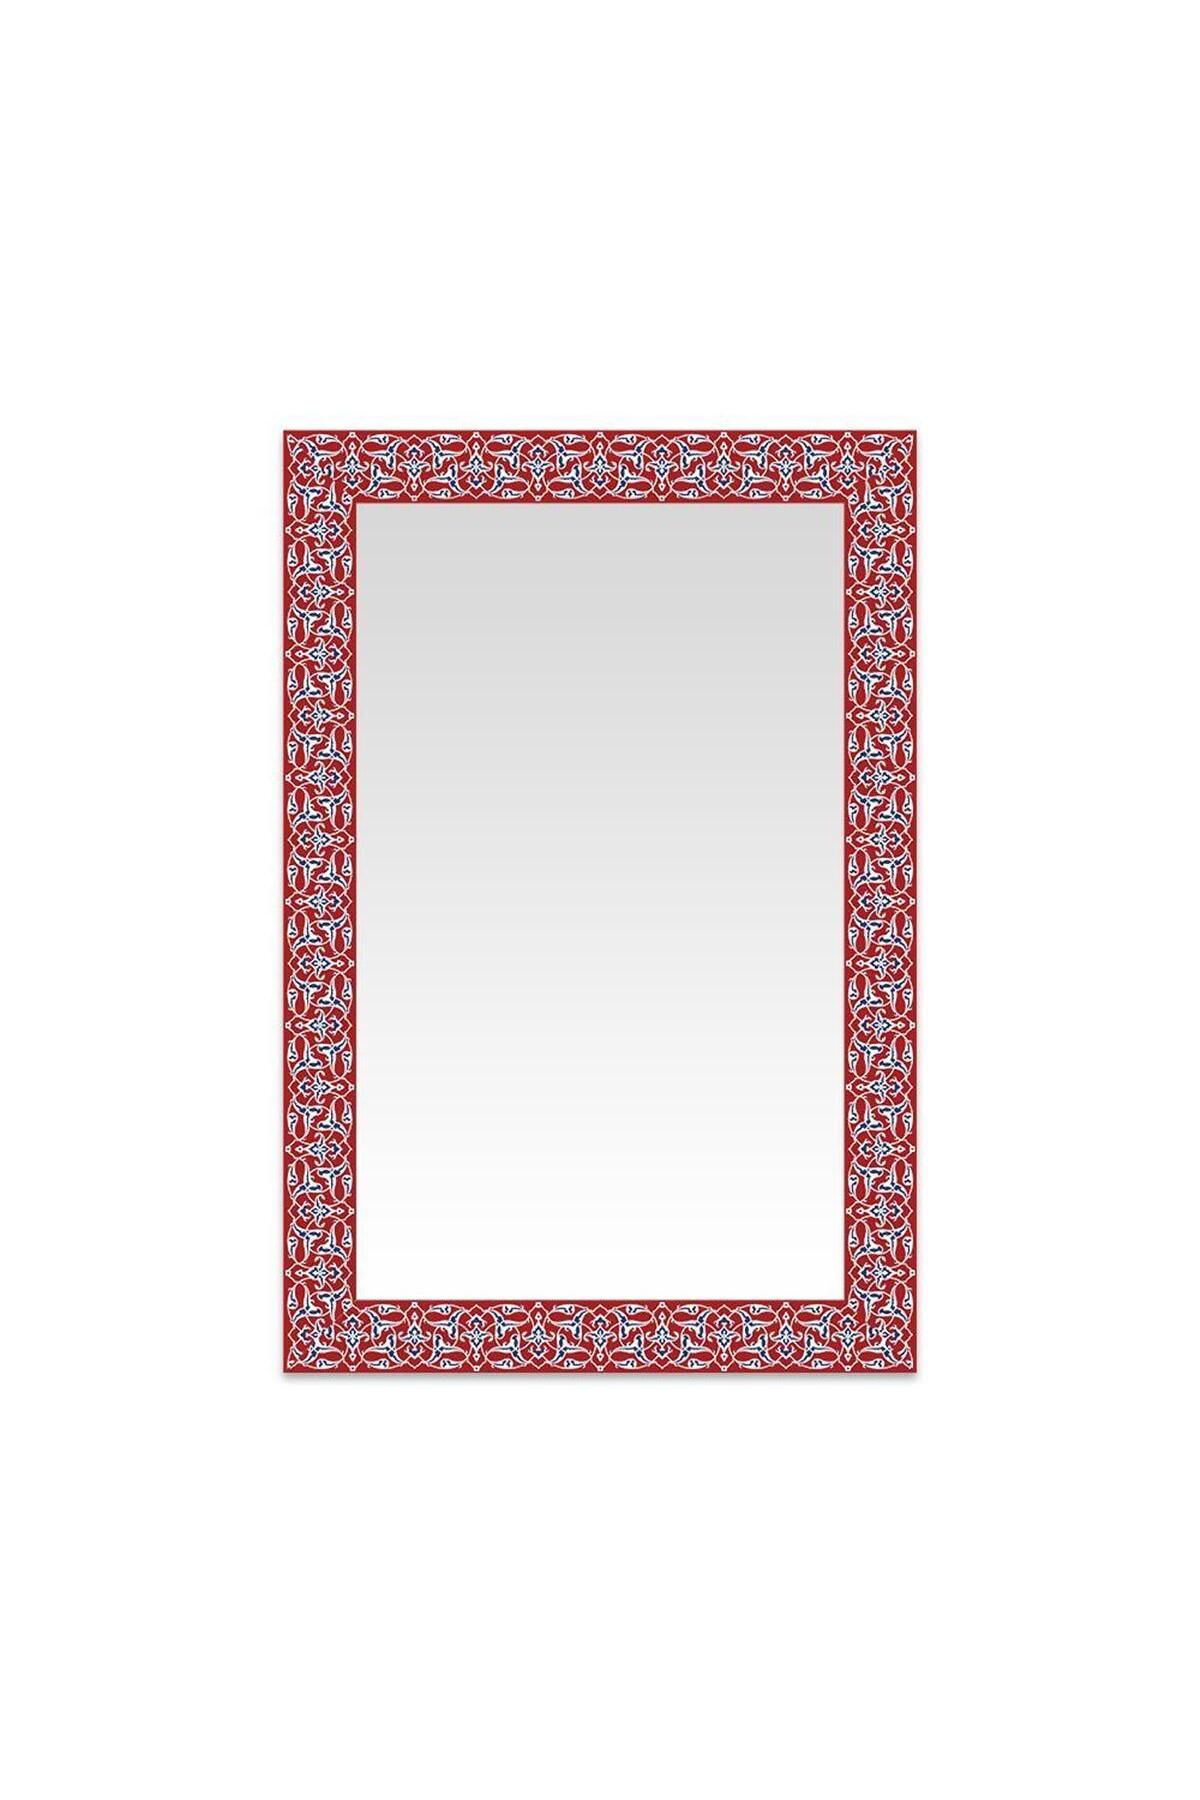 anadolia Rumi Kırmızı Dekoratif Ayna